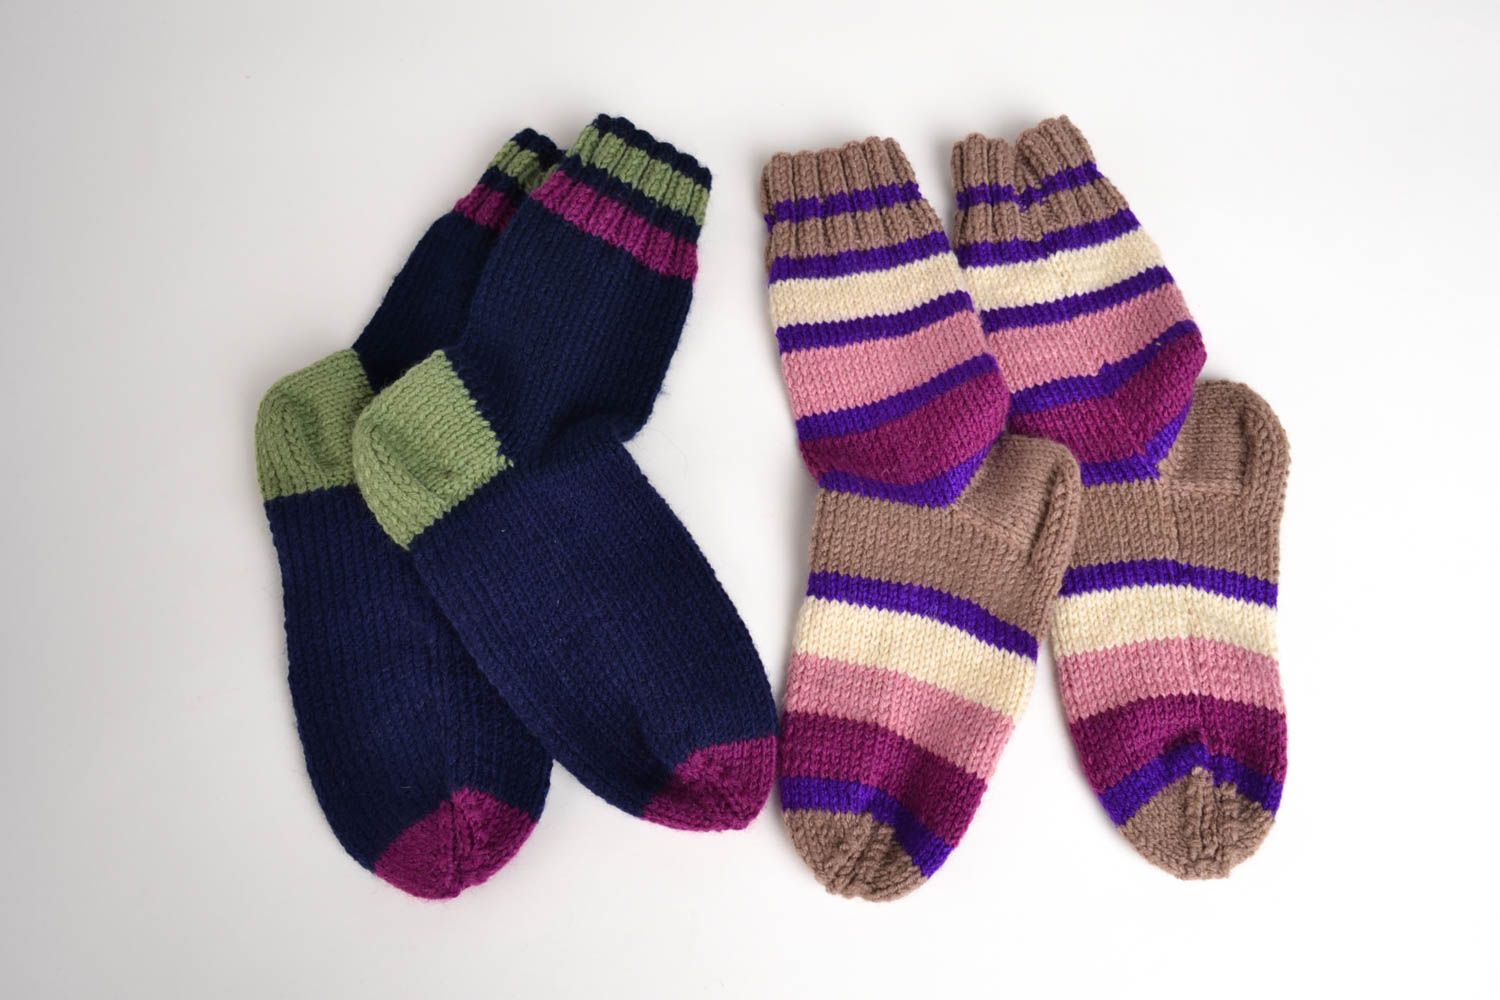 Knitted socks handmade woolen socks winter clothing 2 pairs womens woolen socks photo 2